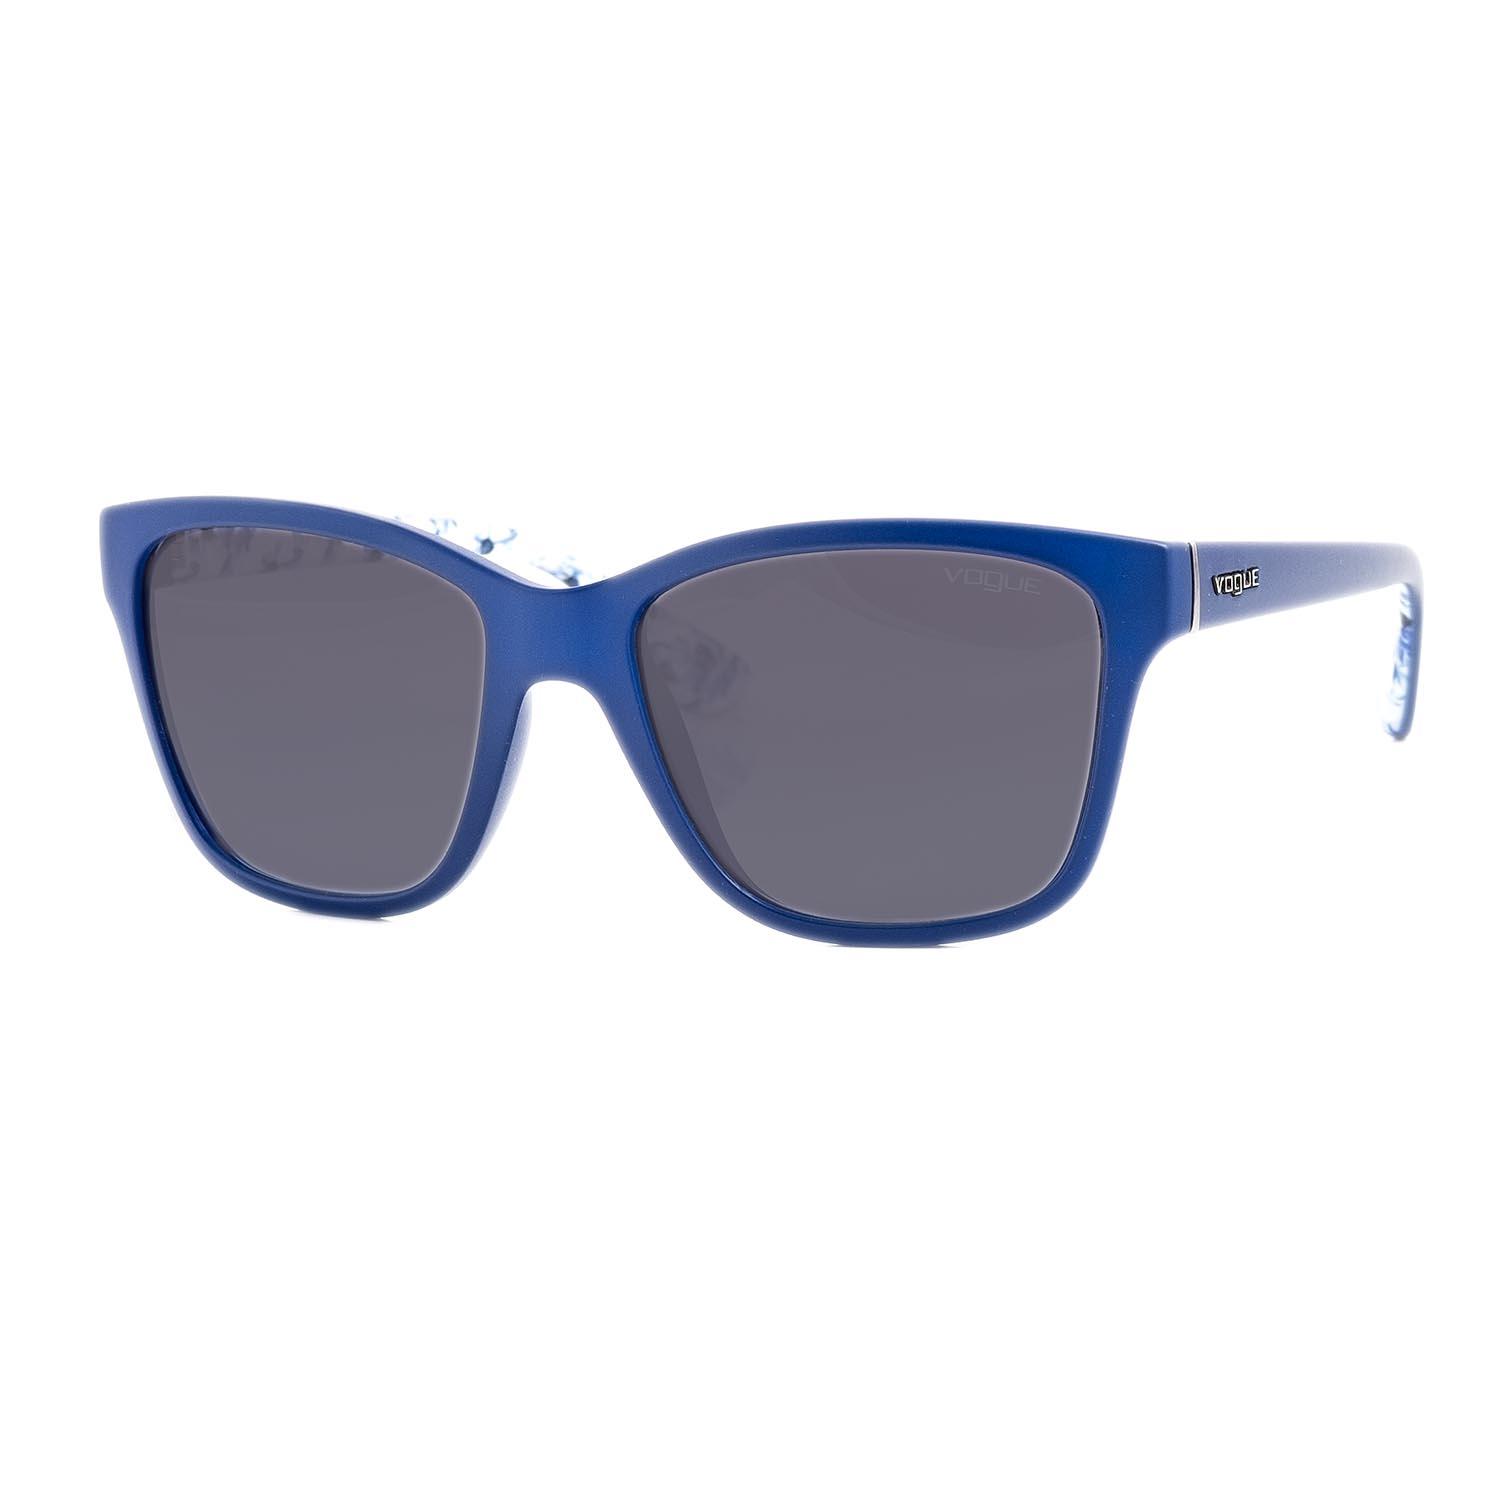 Gafas de sol Vogue 2896s azul mate